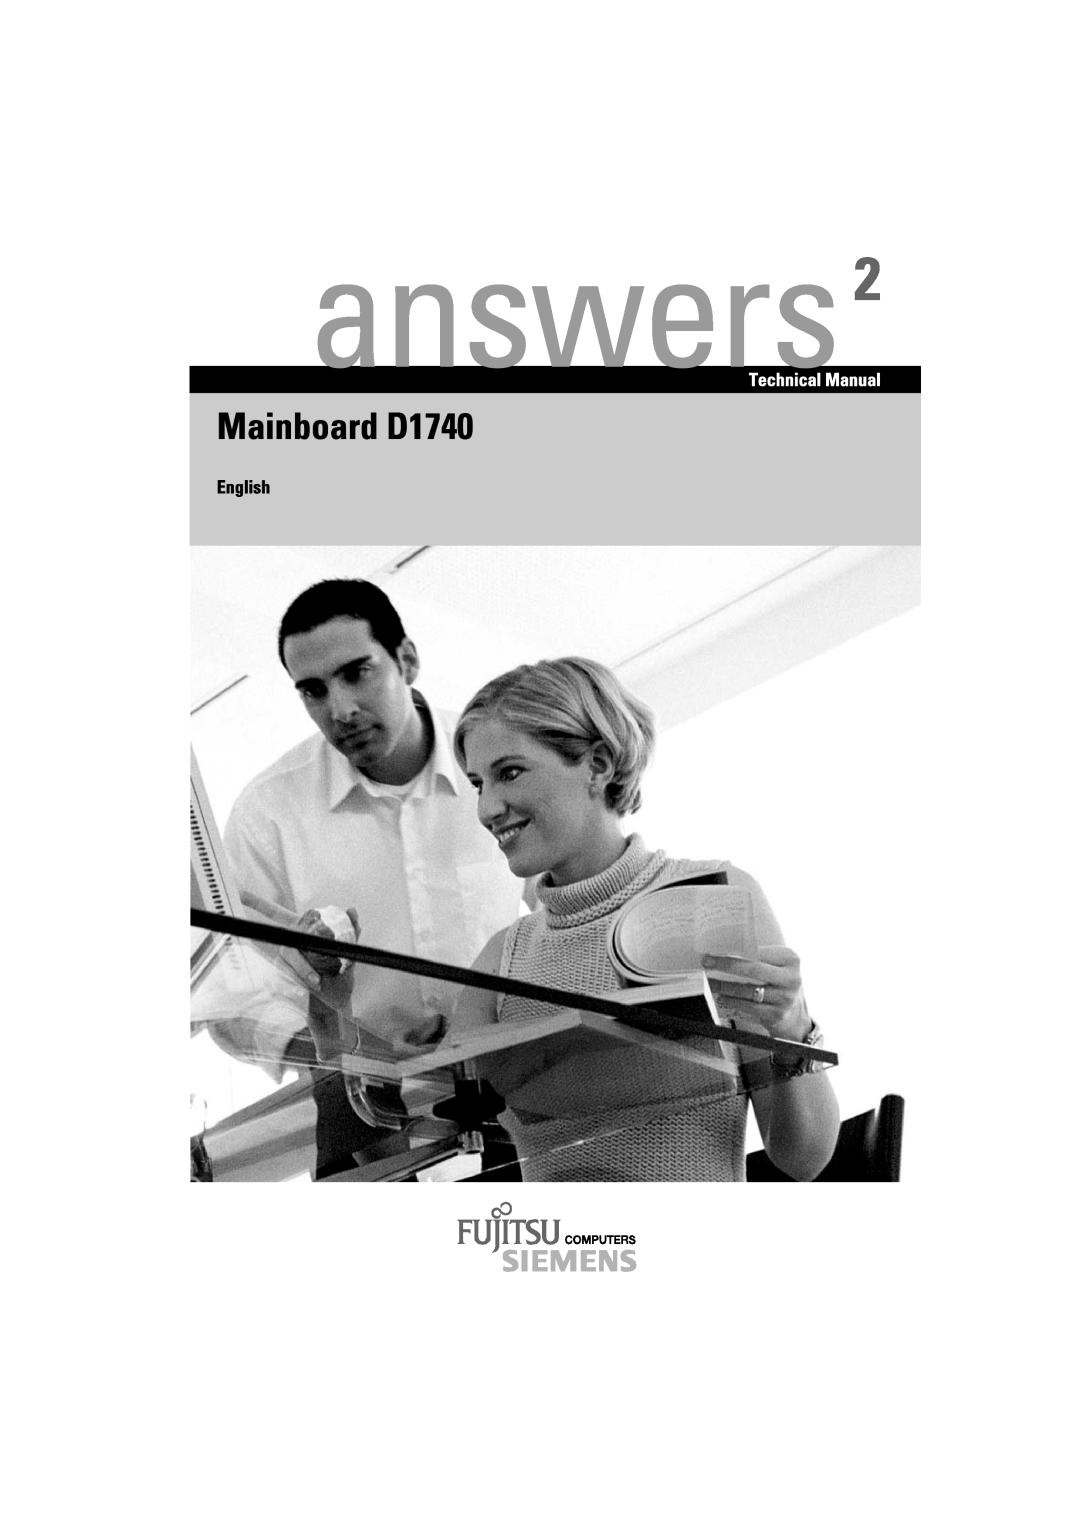 Fujitsu technical manual English, answers, Mainboard D1740, Technical Manual 